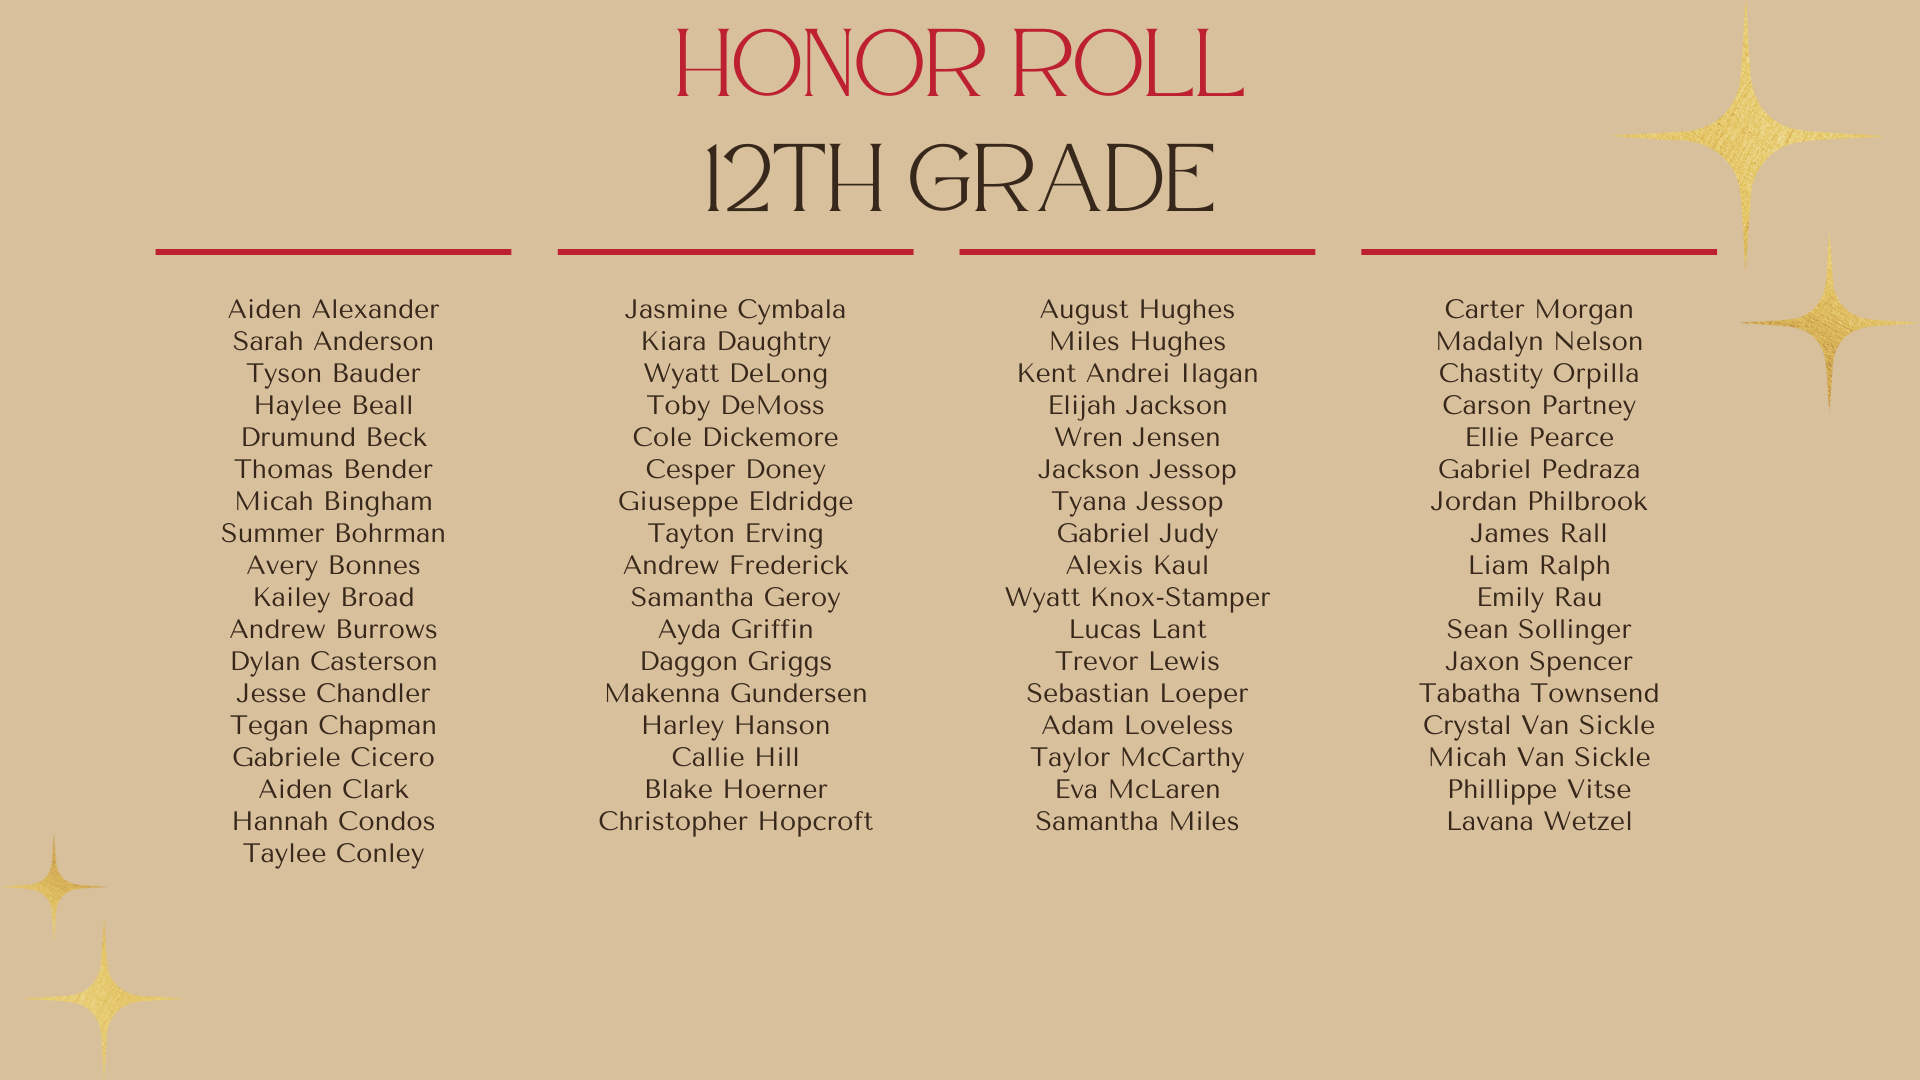 Honor Roll 12th grade